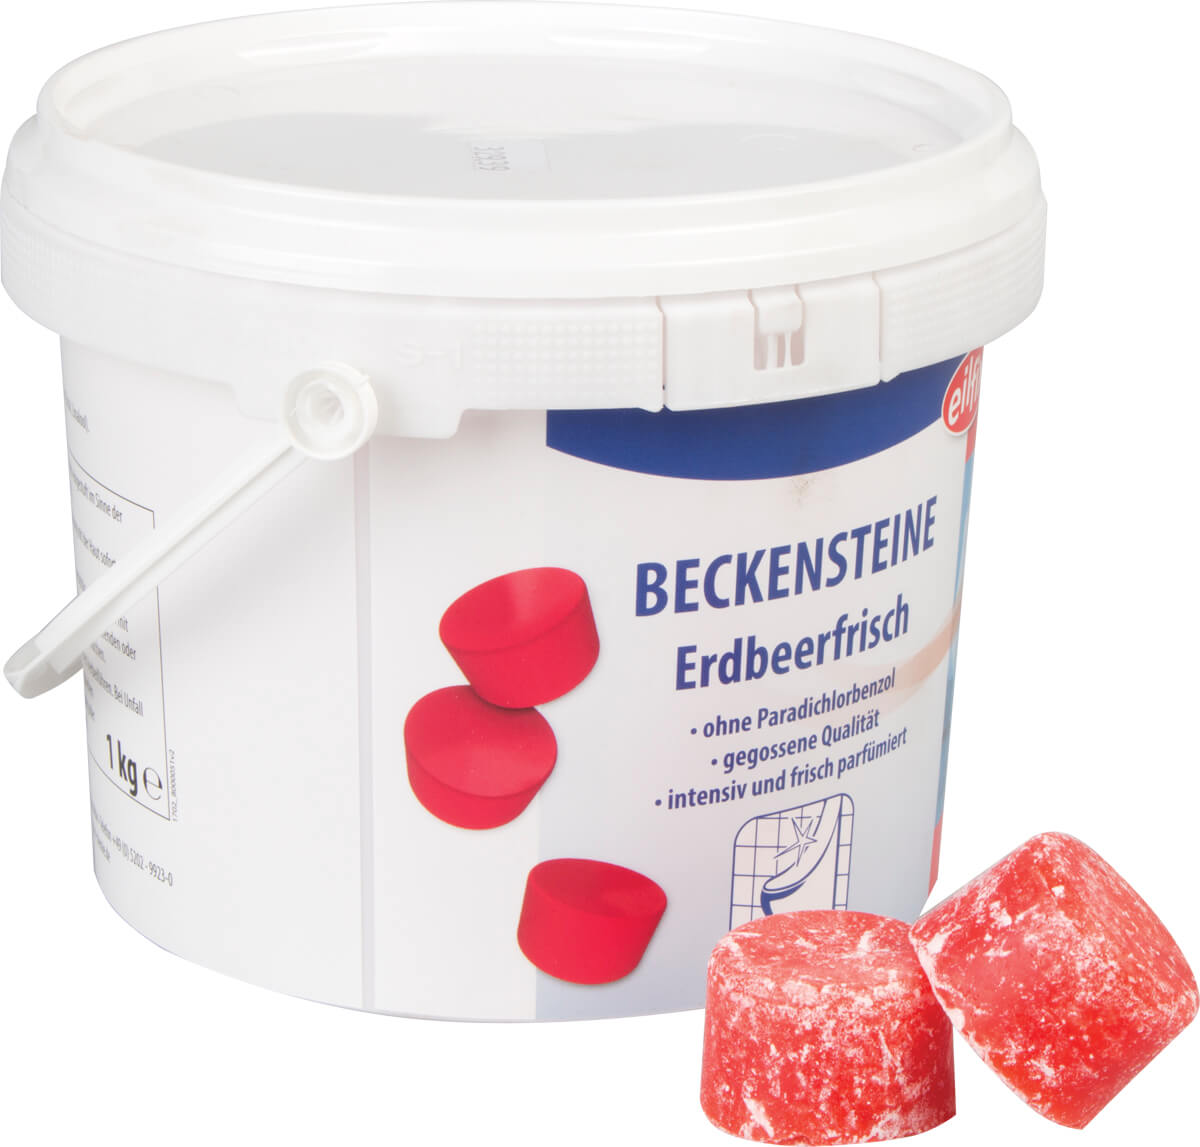 Deodorizer blocks for urinals - strawberry (1 kg)